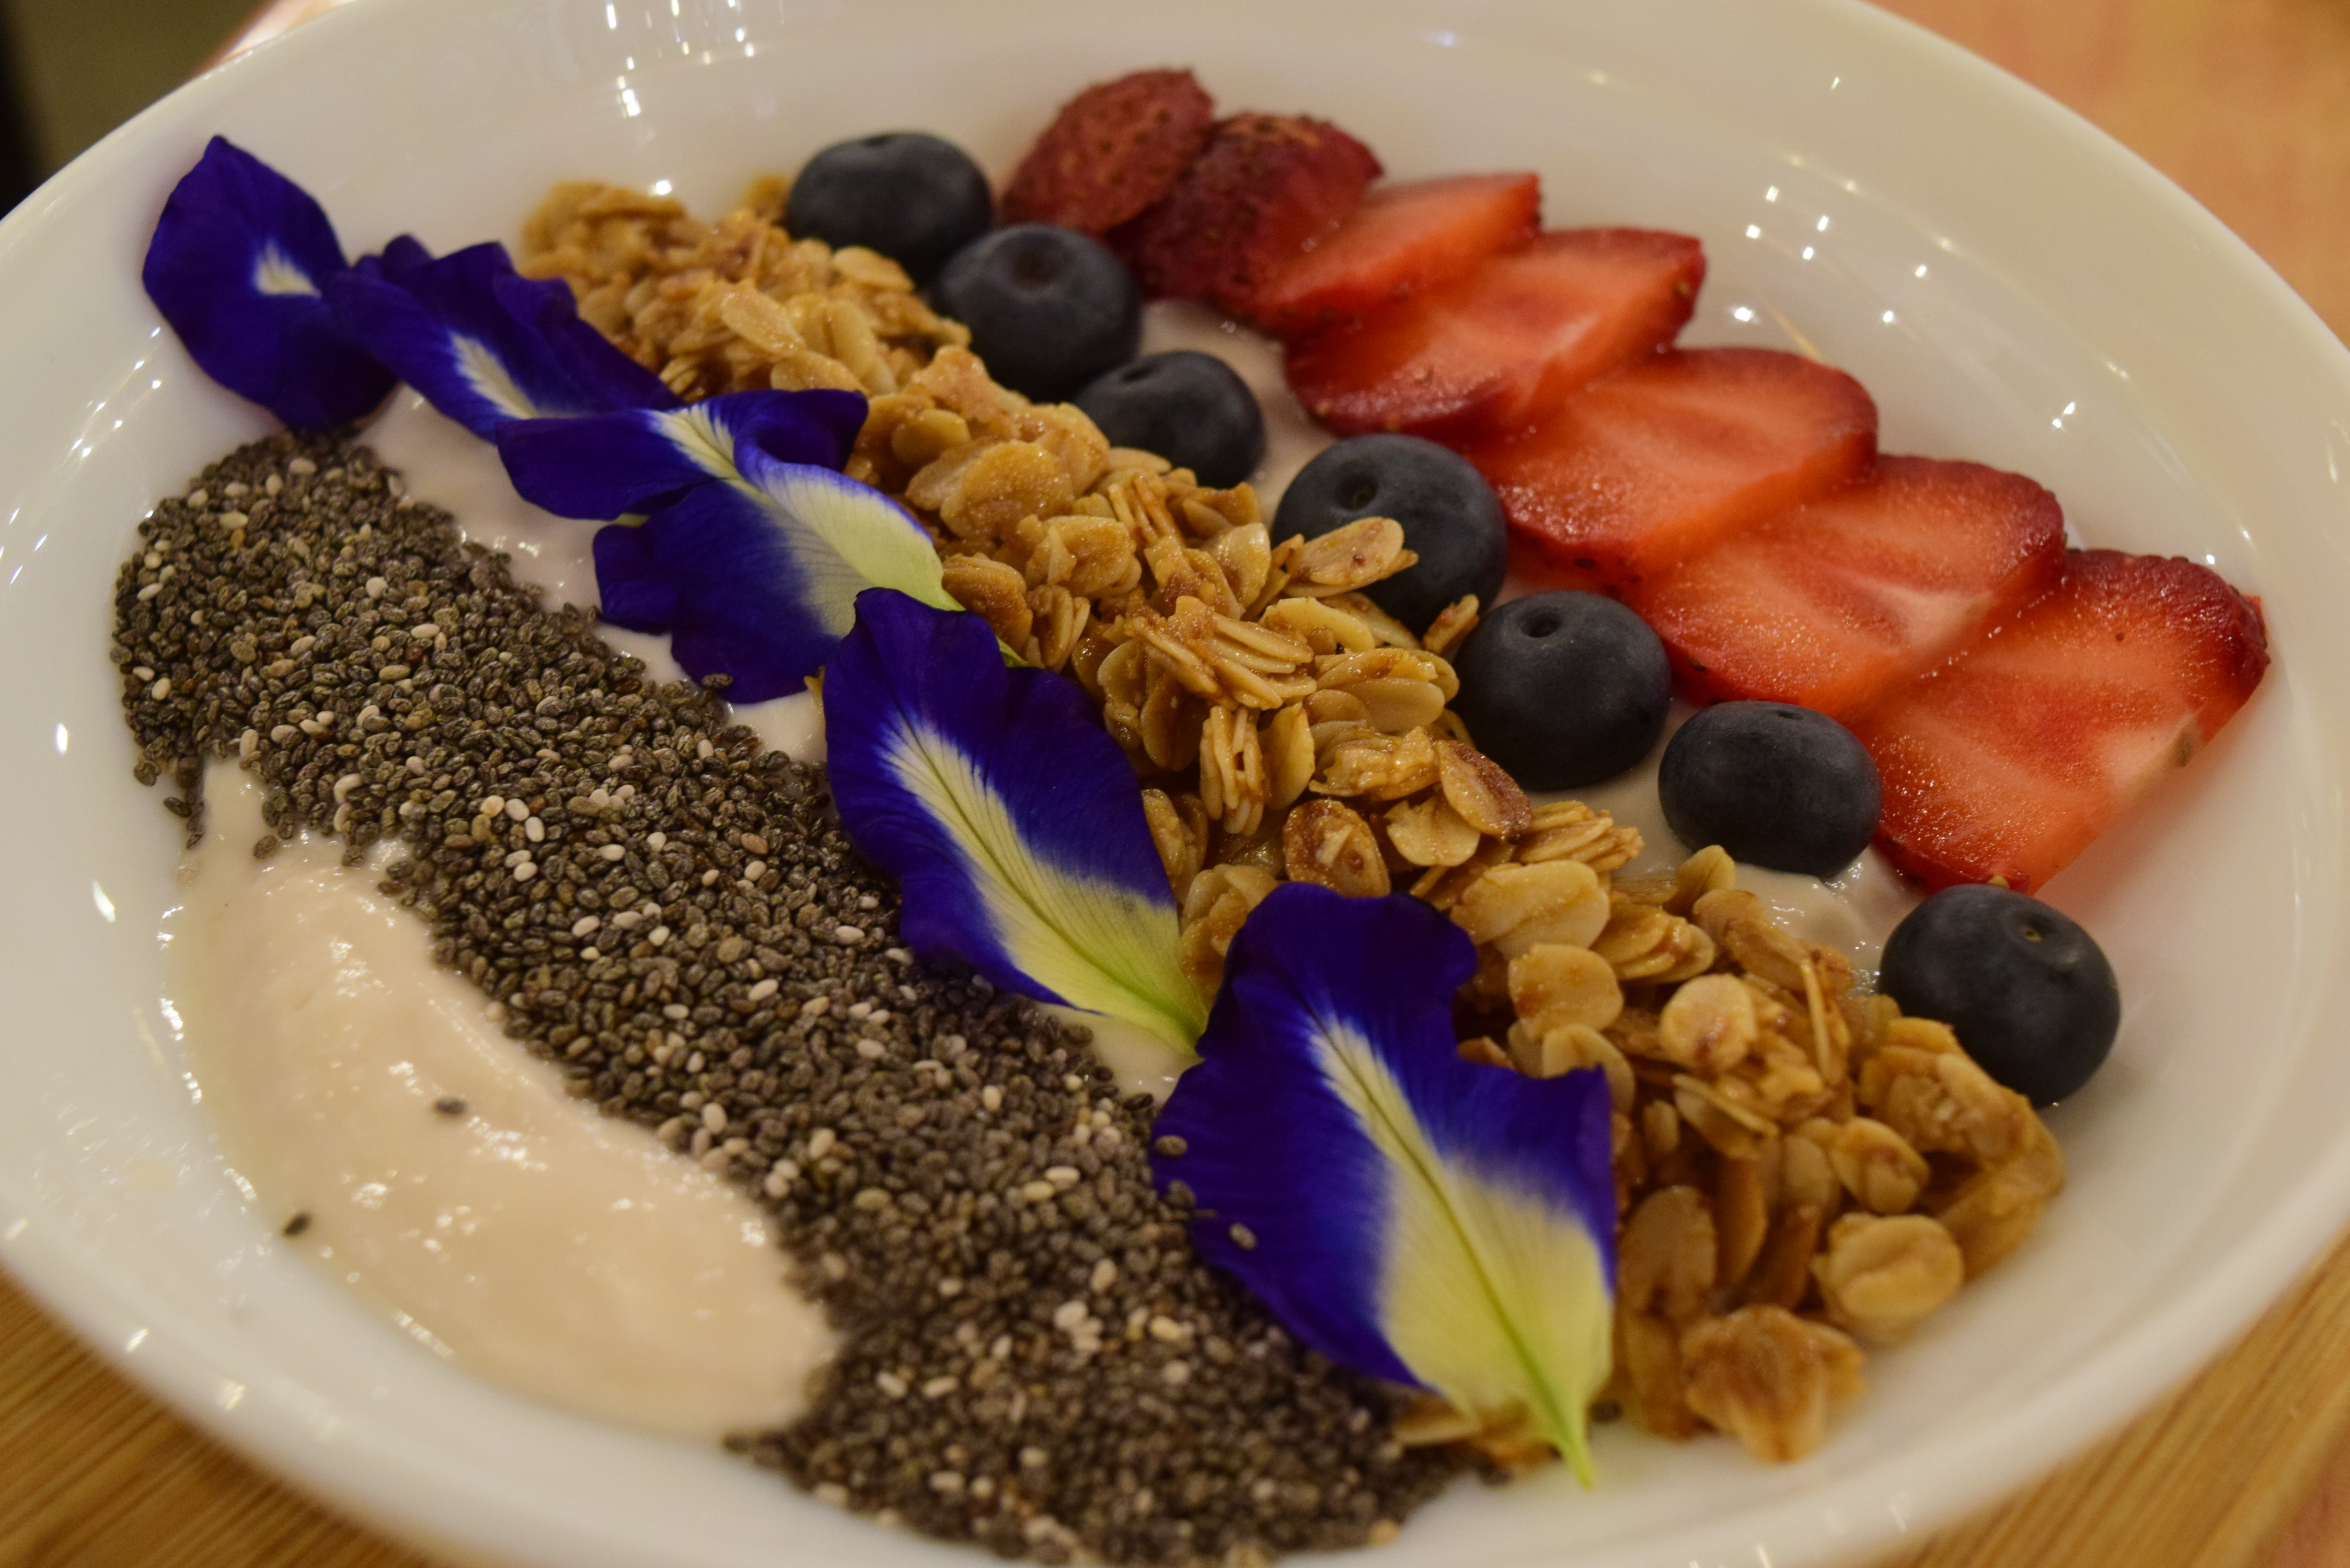 Consists of strawberry yogurt, granola, chia seeds, strawberries, blueberries, and blue ternates